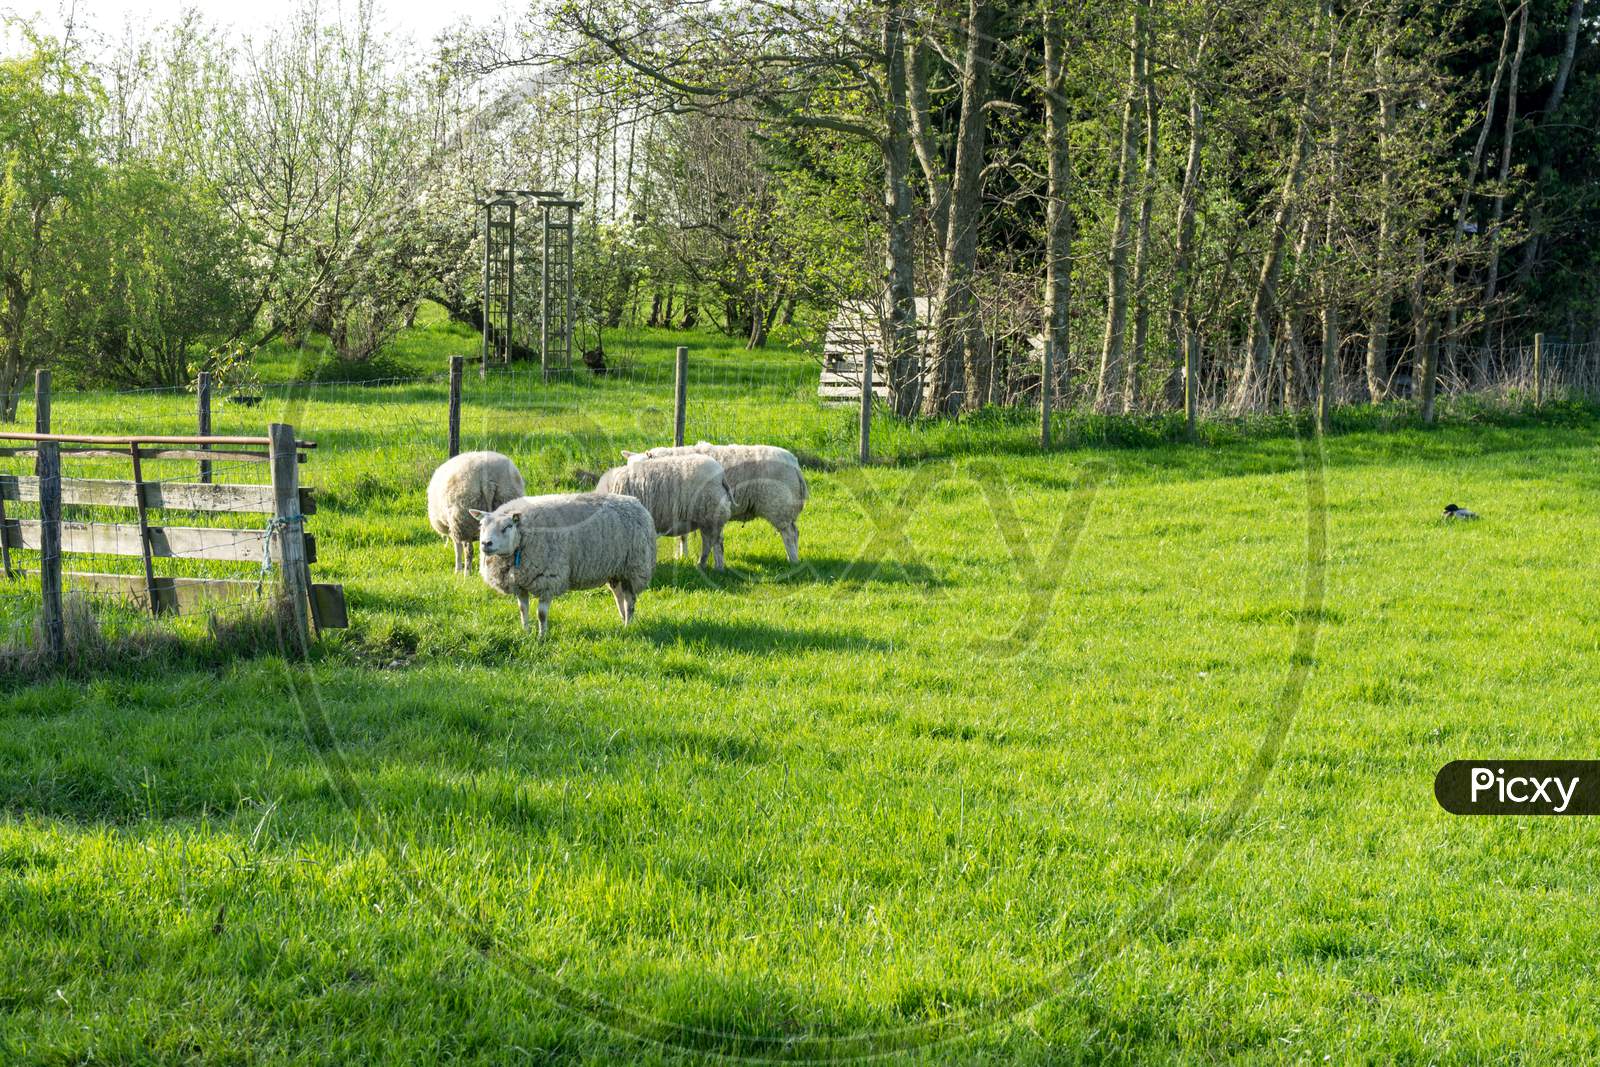 Netherlands,Wetlands,Maarken, Sheep With Wool Grazing On A Field